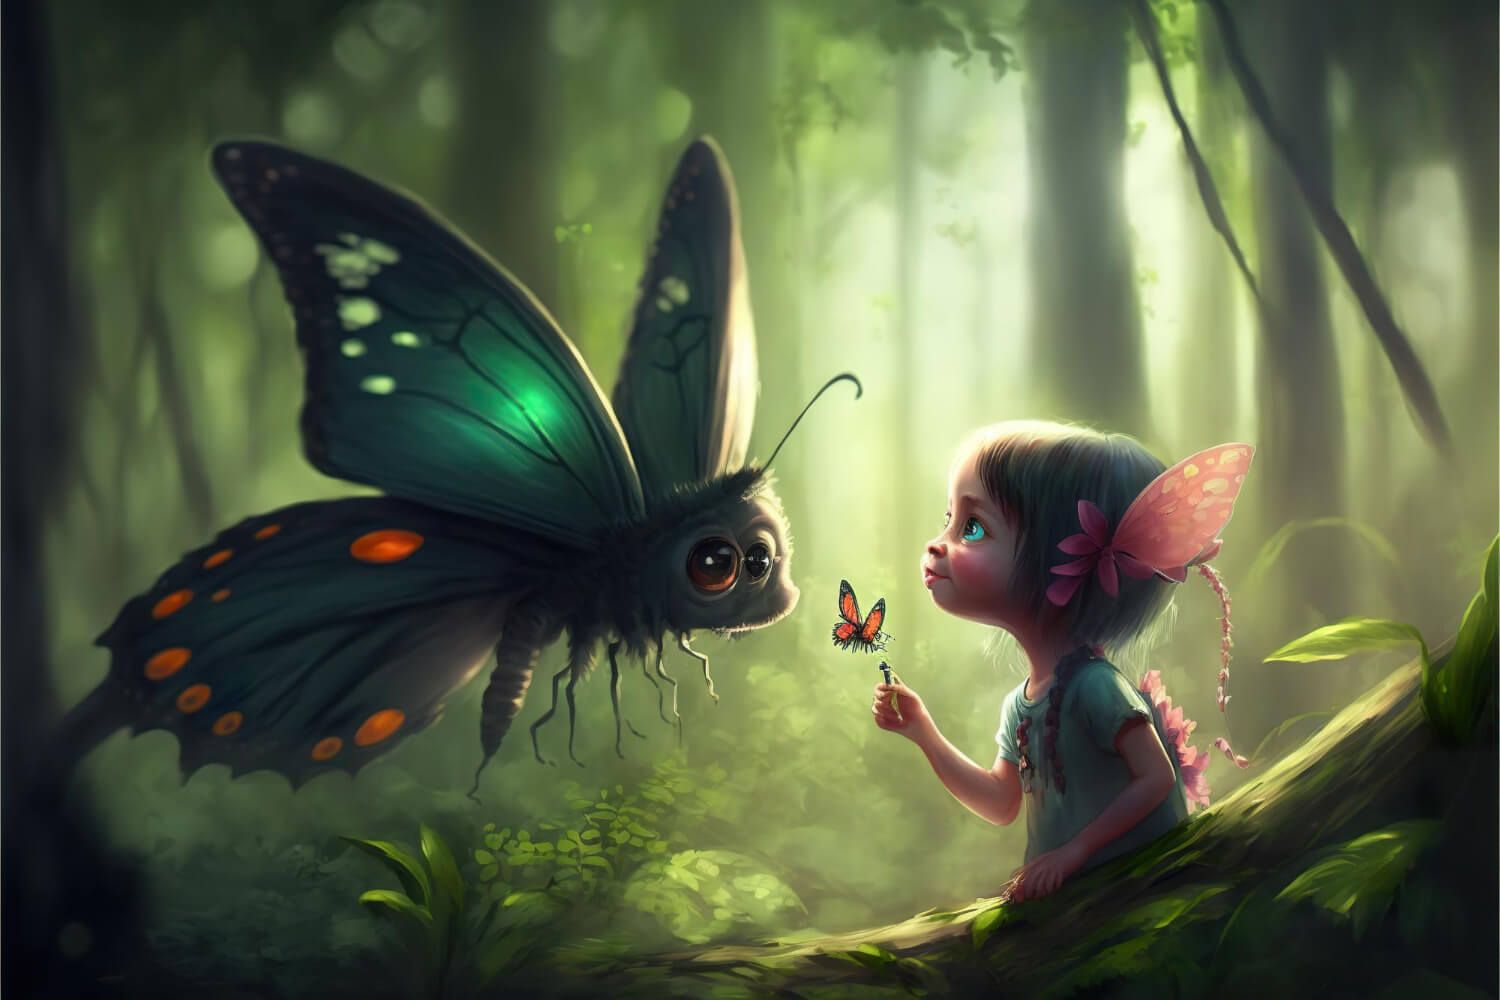 Alice speaking to the Caterpillar